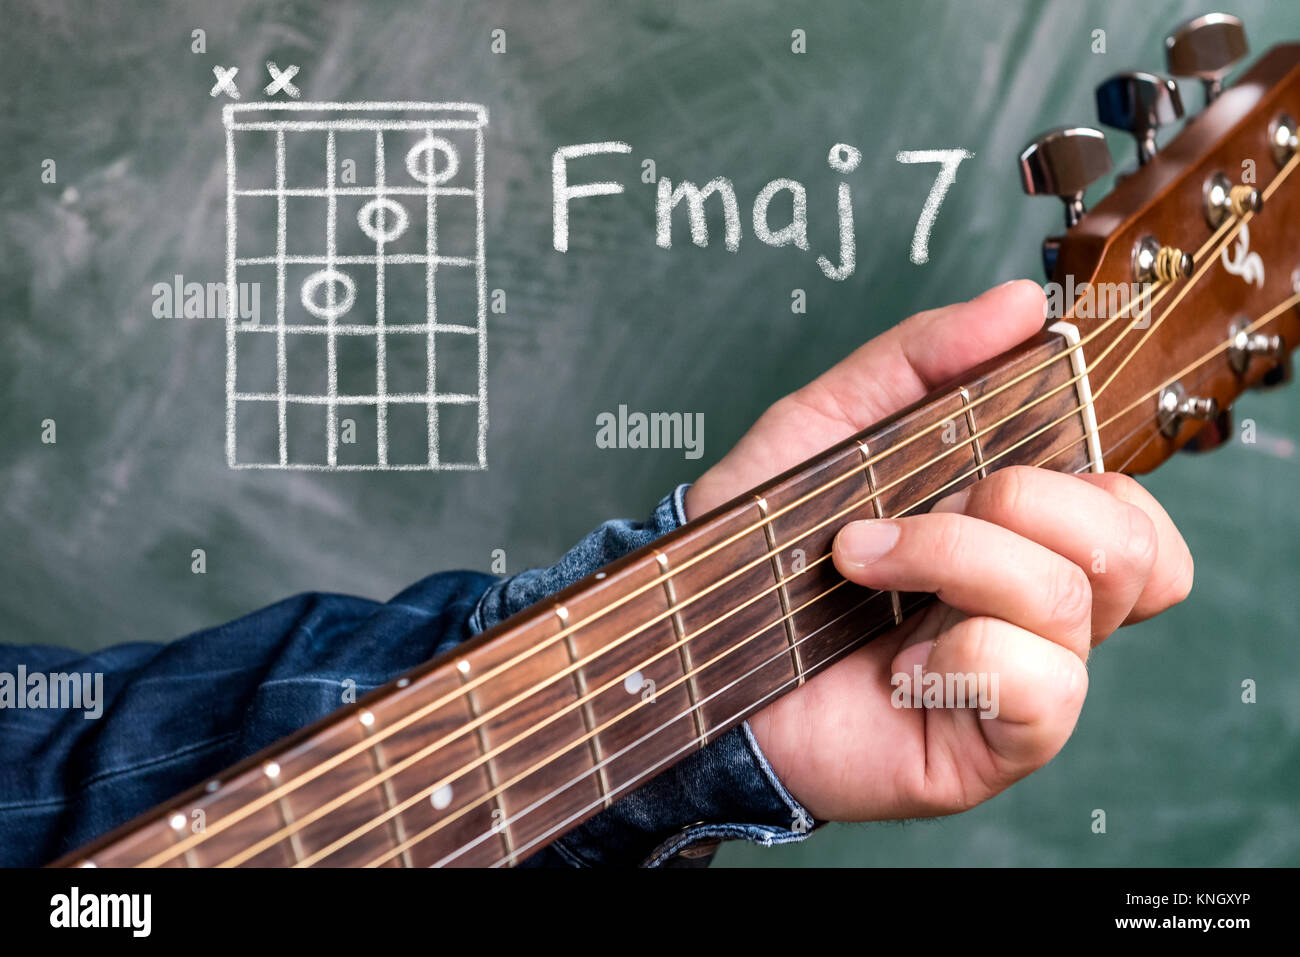 Man in a blue denim shirt playing guitar chords displayed on a blackboard,  Chord F major 7 Stock Photo - Alamy